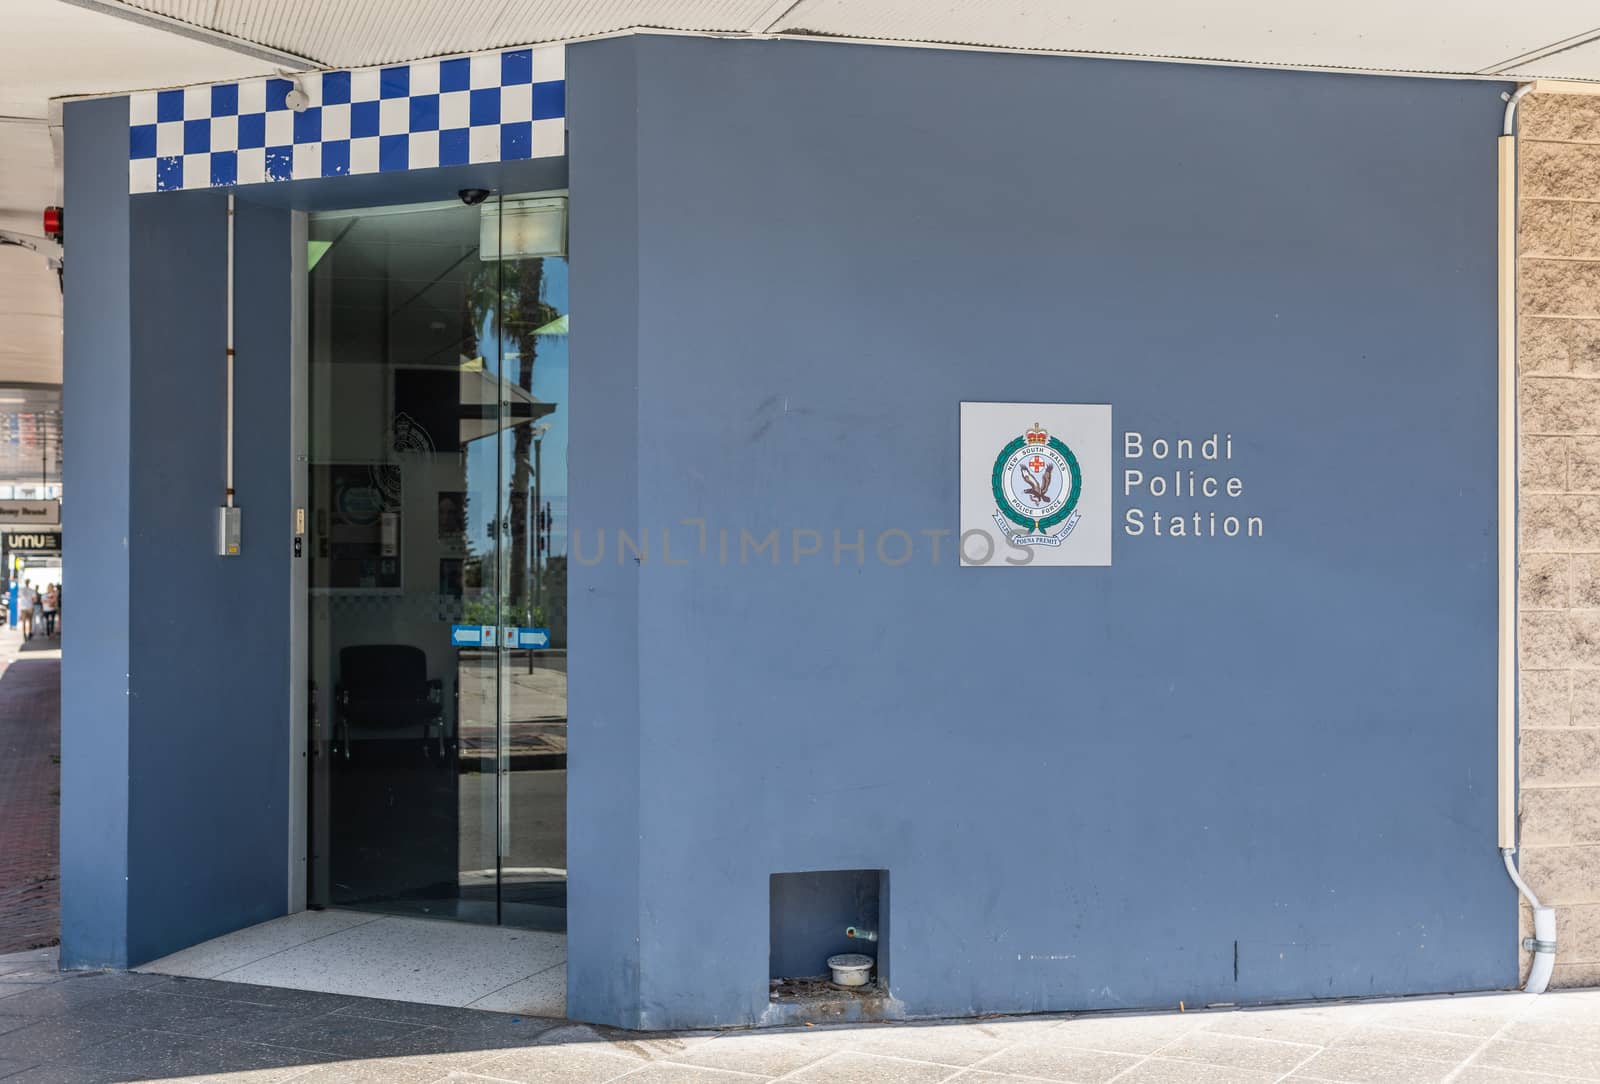 Sydney, Australia - February 11, 2019: Police Station of Bondi Beach with light blue facade, emblem, and front door.